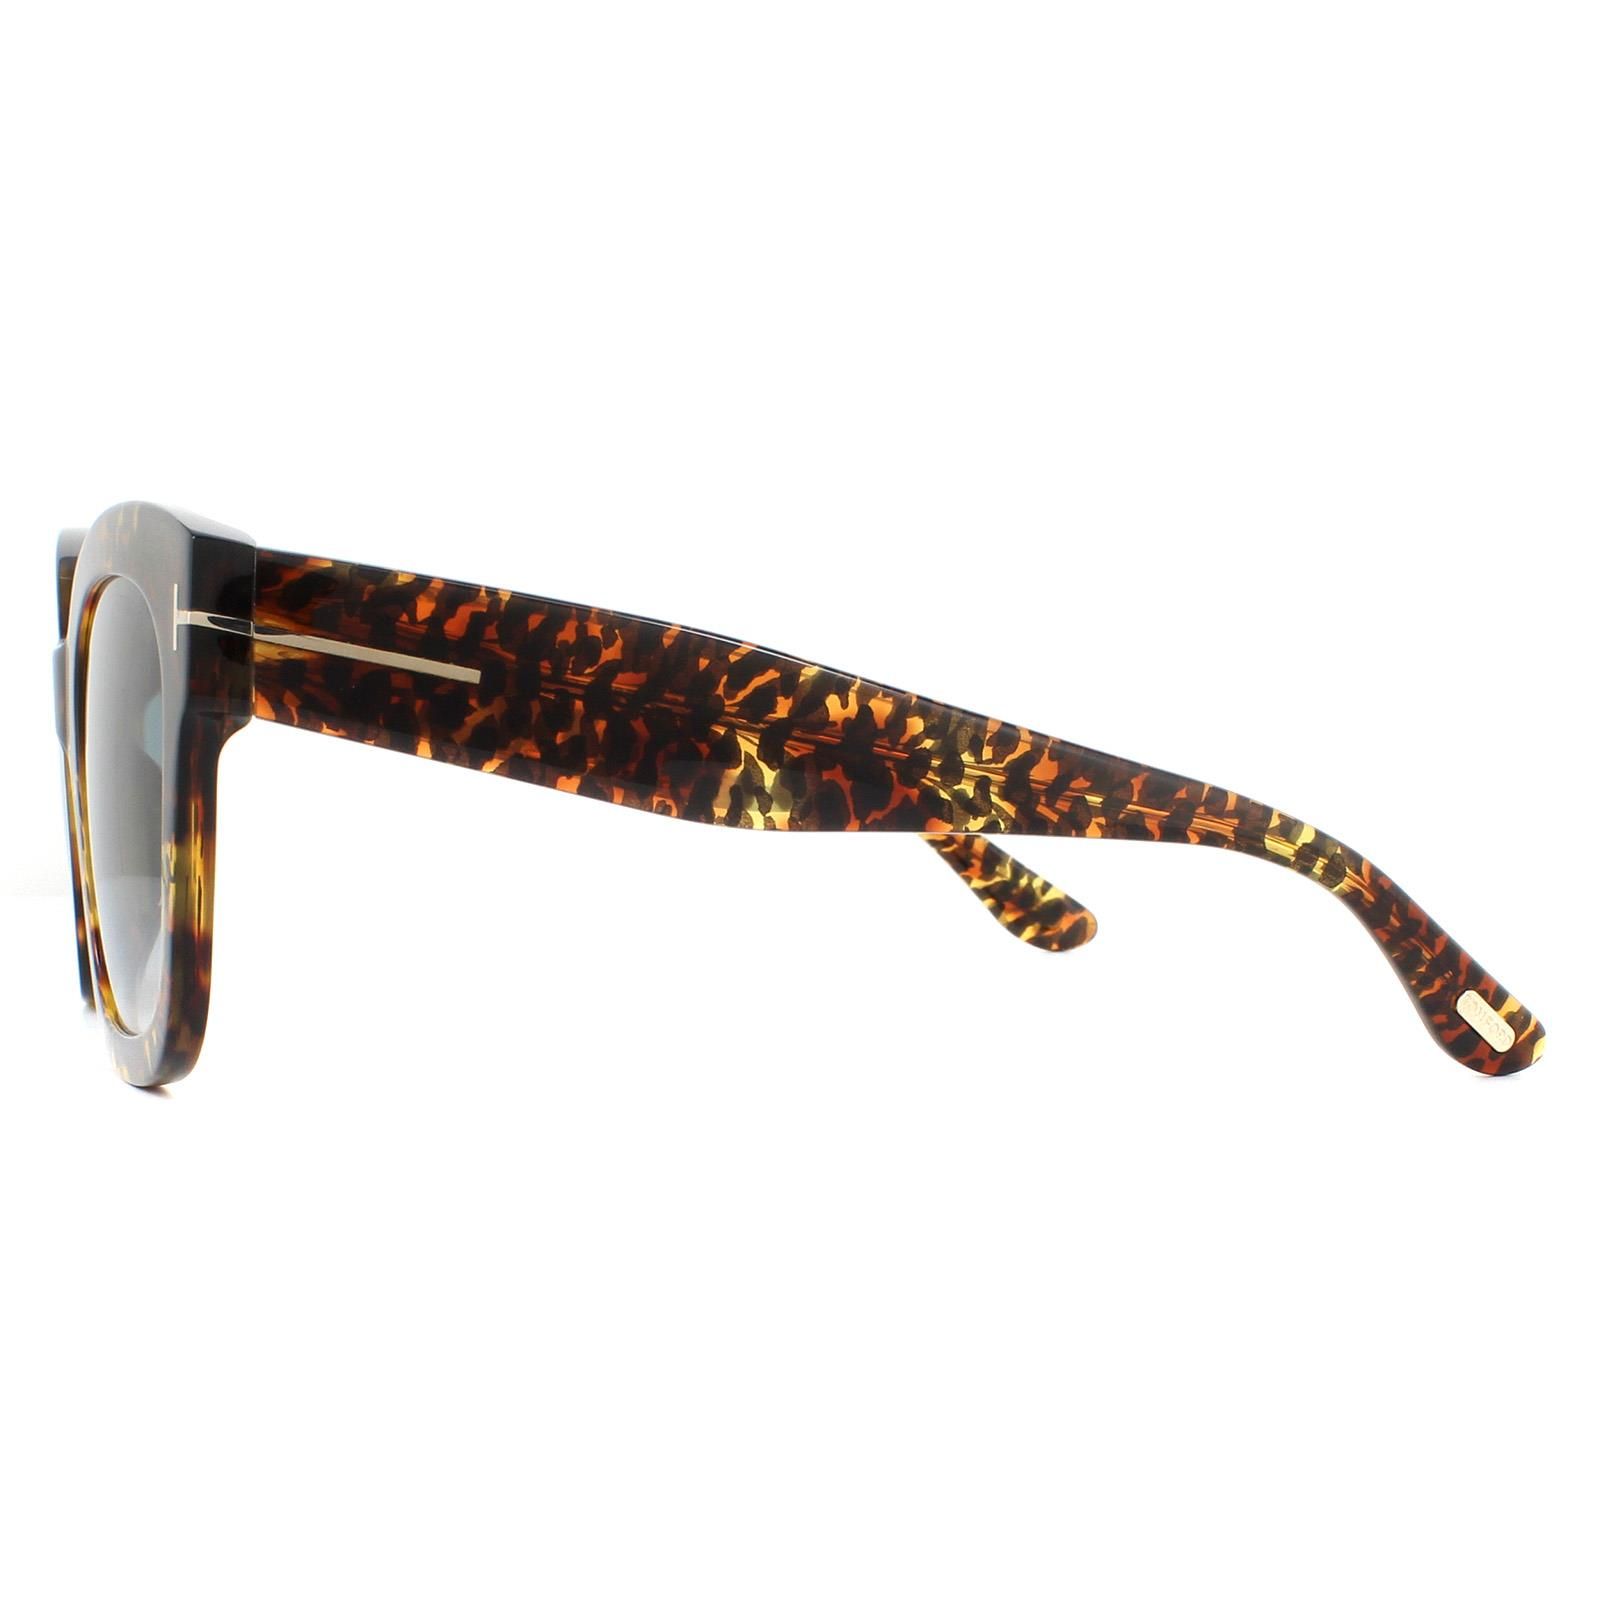 Tom Ford Sunglasses Beatrix FT0613 52B Leopard Havana Blue Gradient